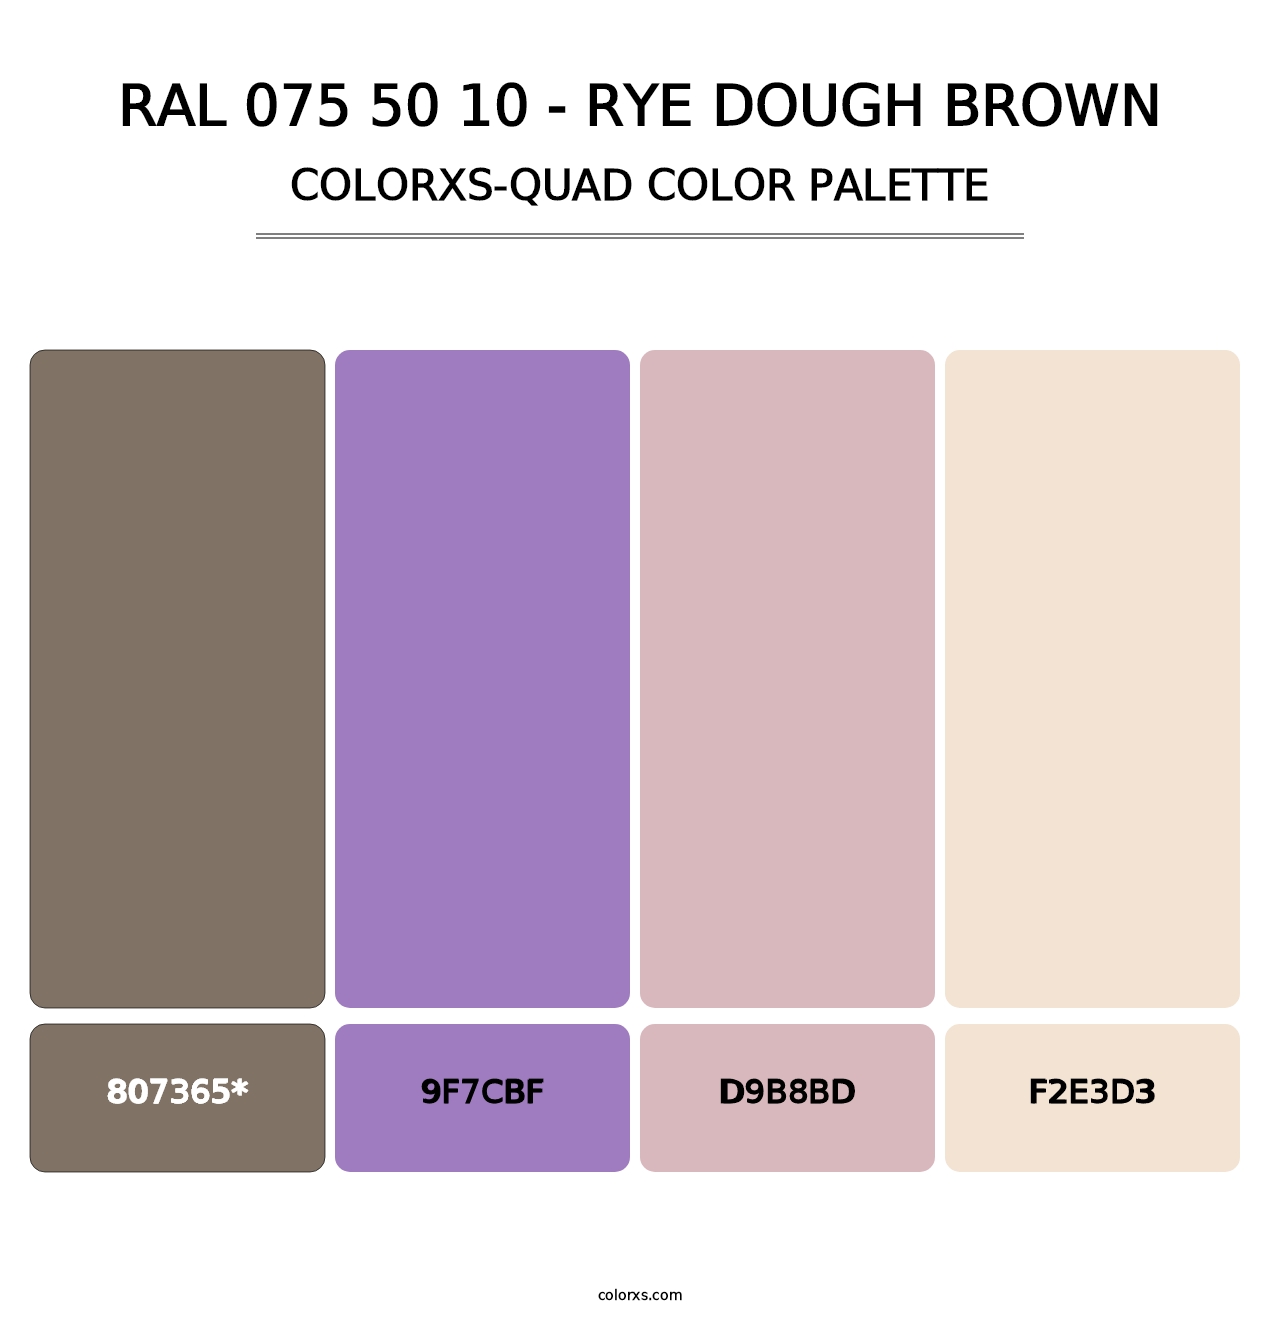 RAL 075 50 10 - Rye Dough Brown - Colorxs Quad Palette